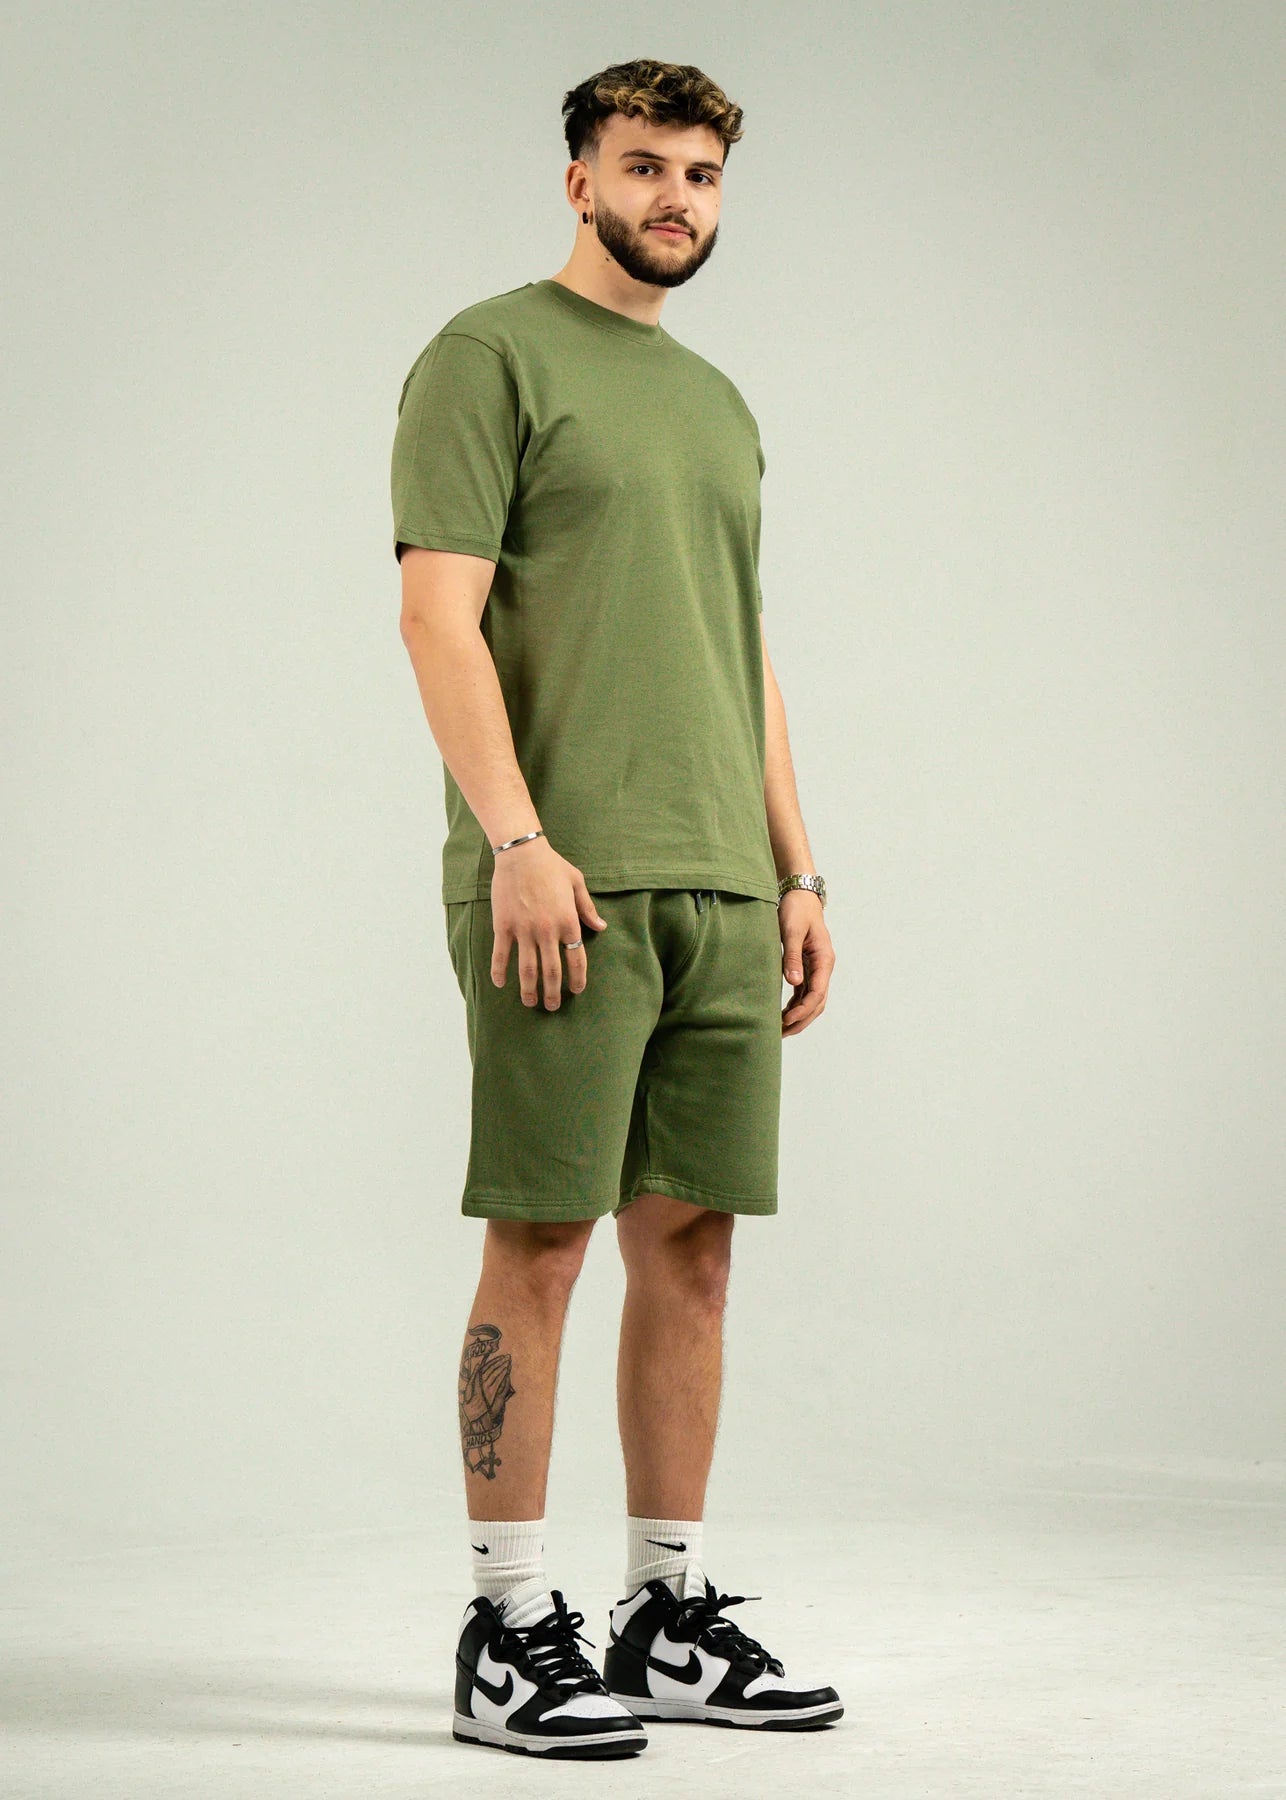 Olive Green T-Shirt and Short Set